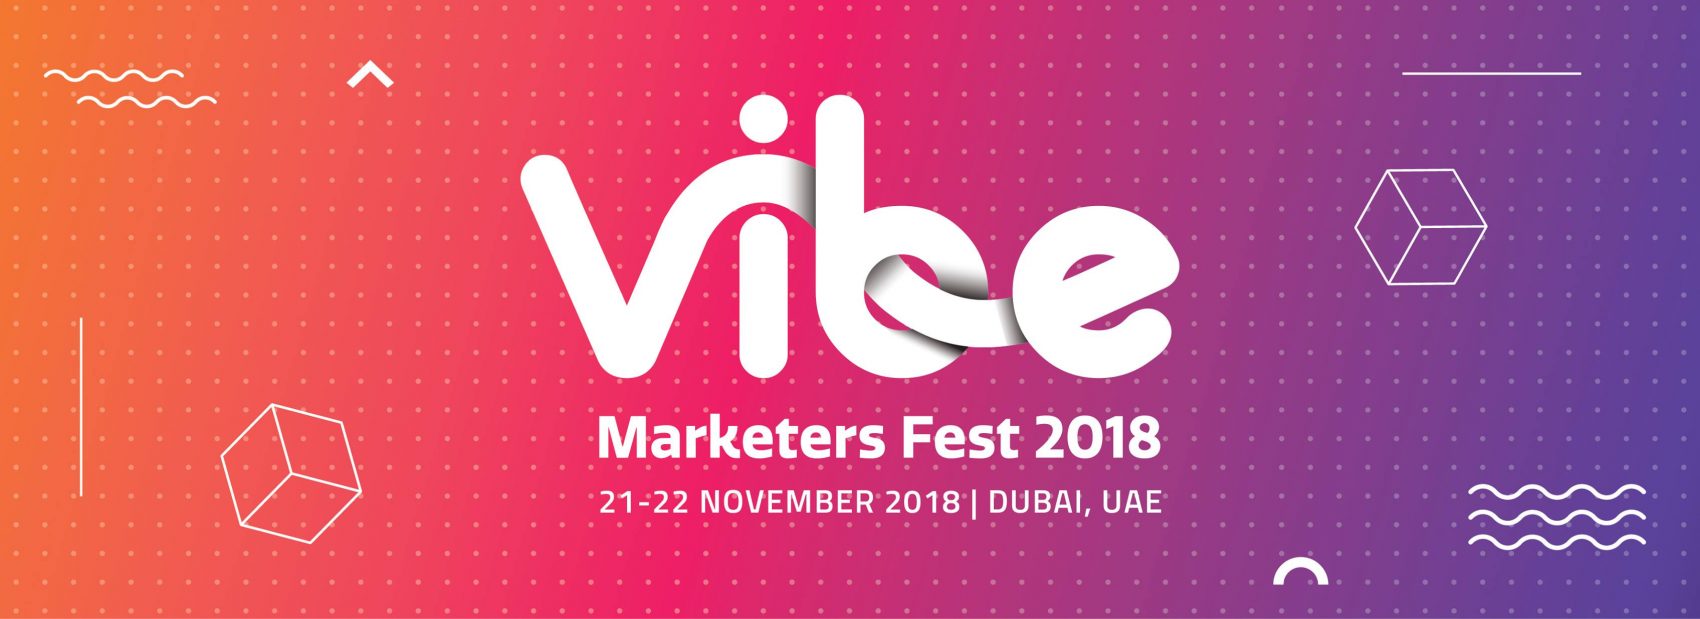 Vibe Marketers Fest - Coming Soon in UAE